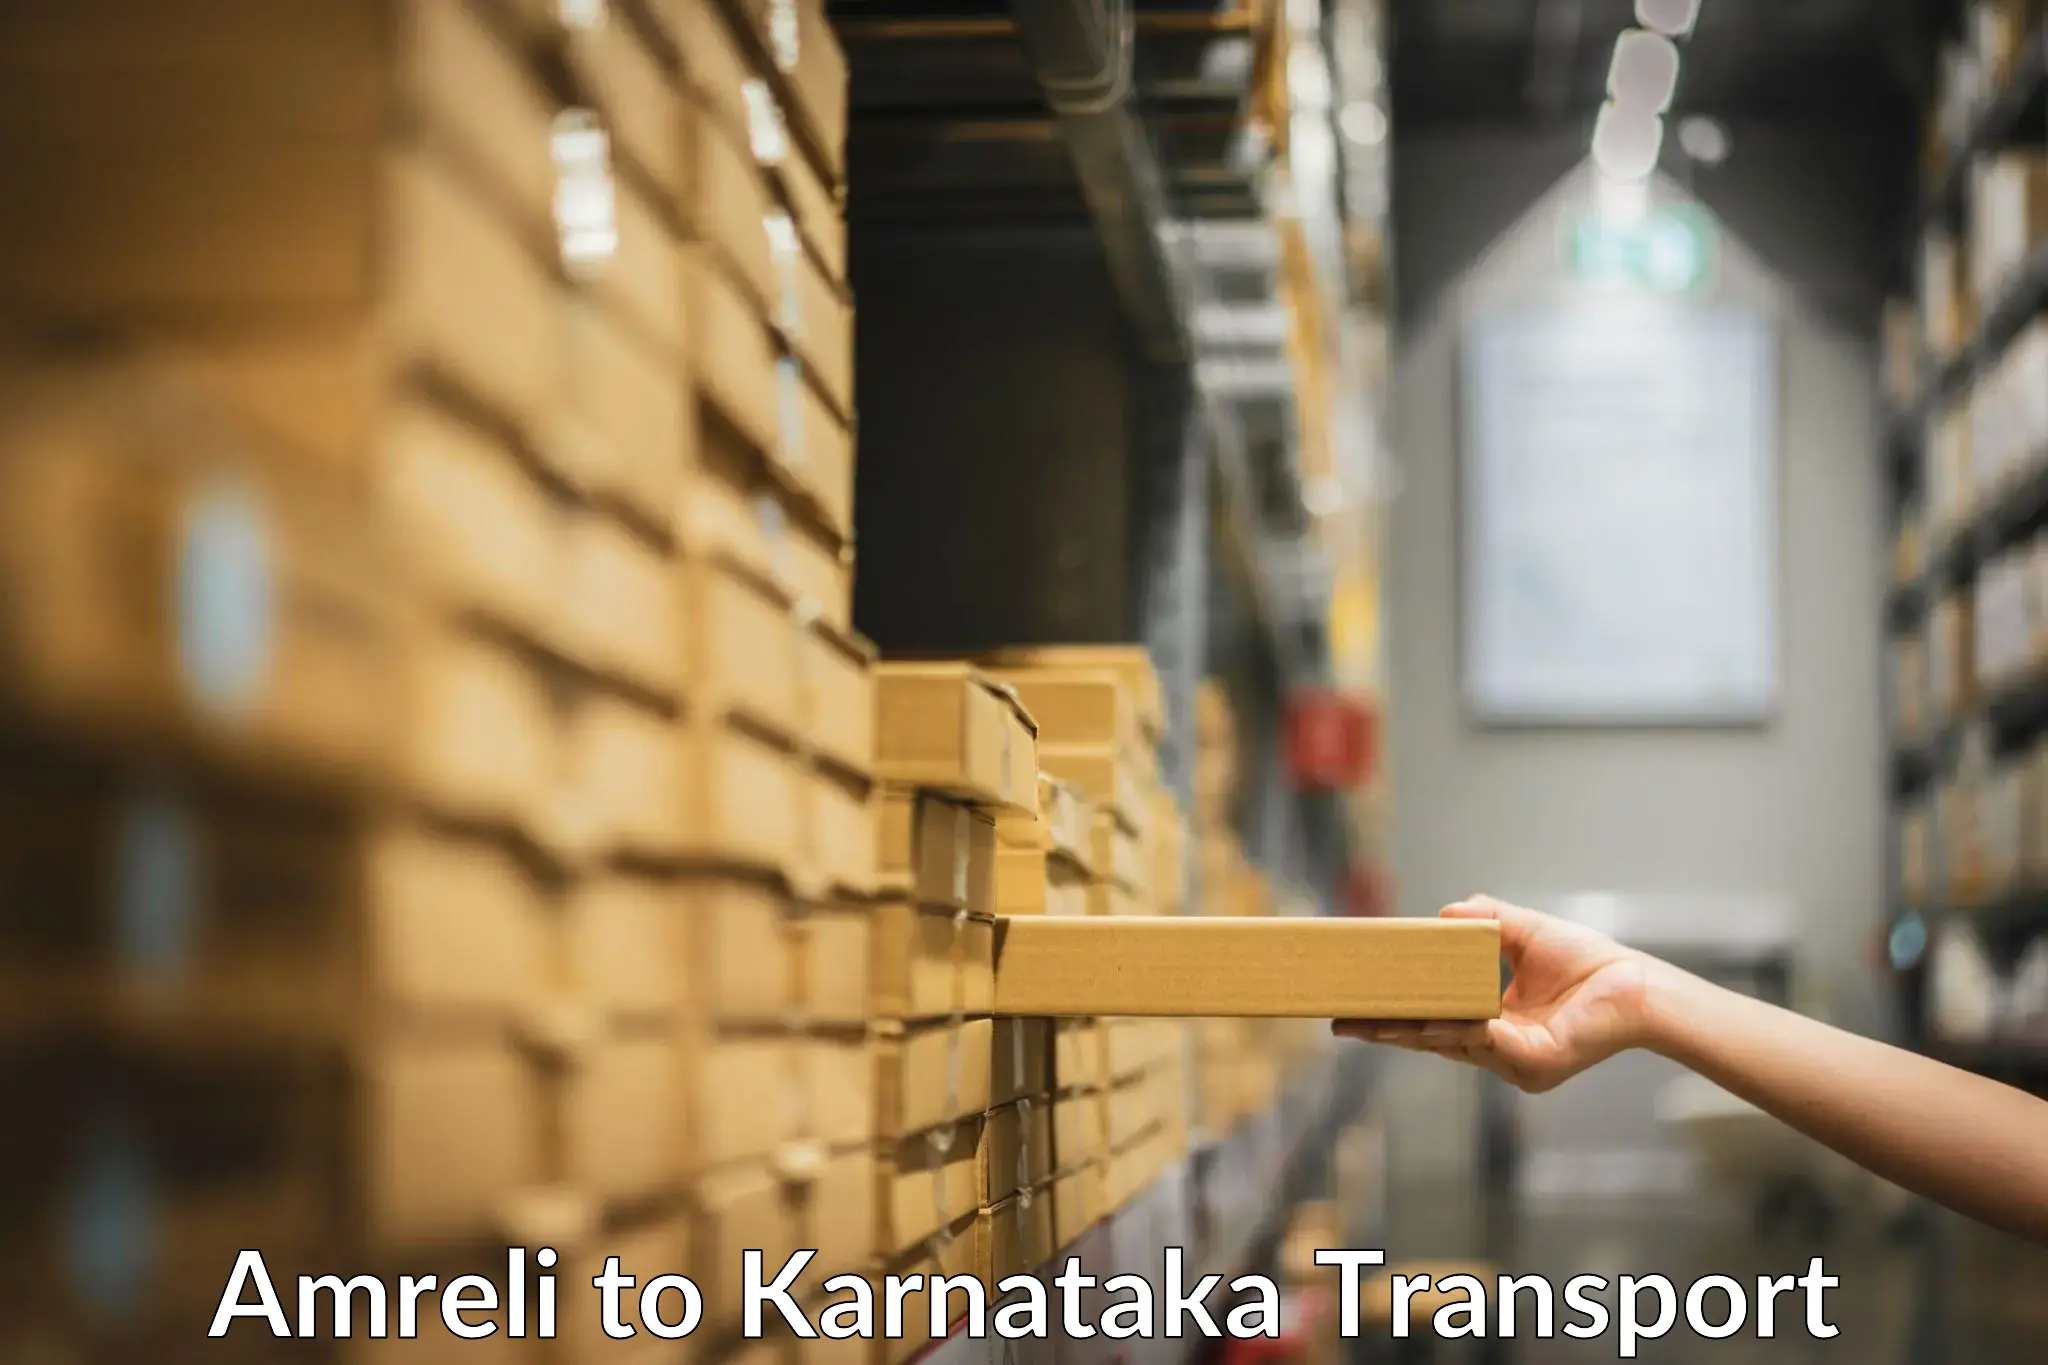 Truck transport companies in India Amreli to Thirthahalli